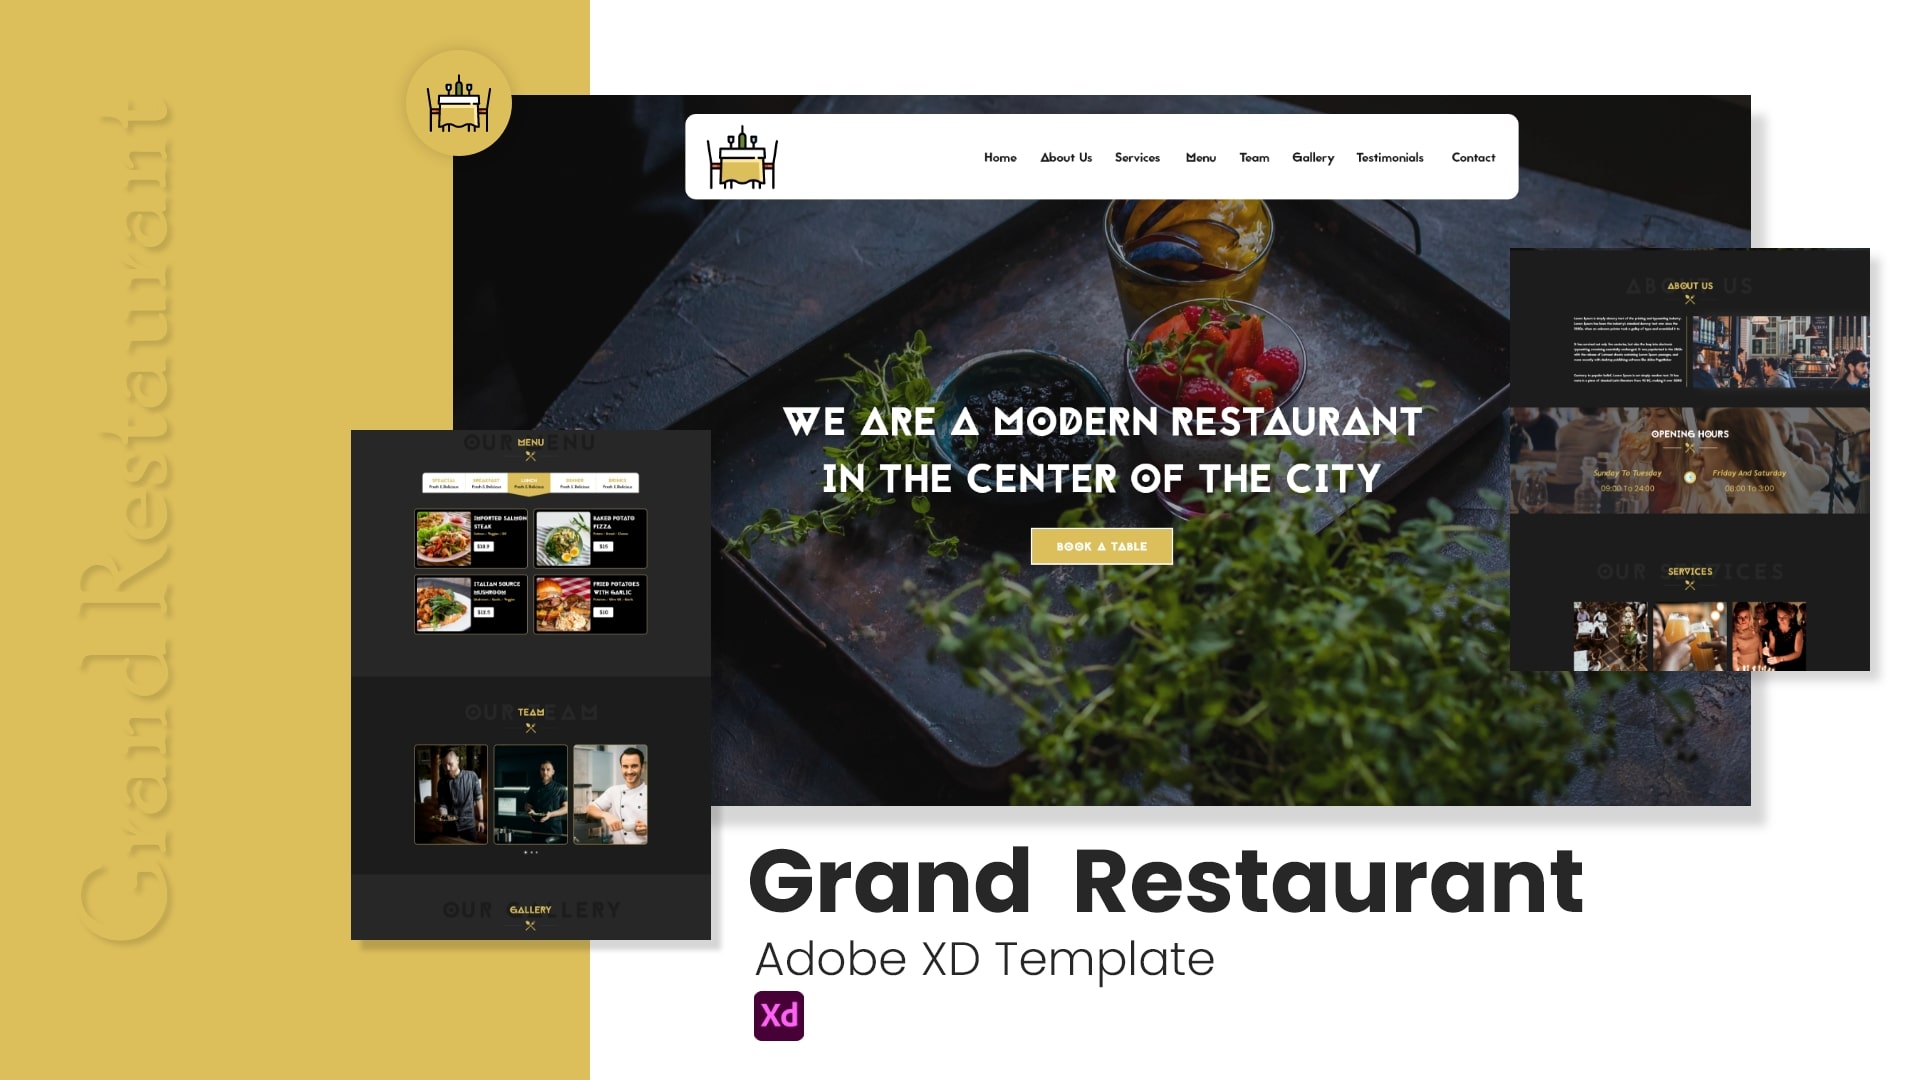 Grand Restaurant – XD Template